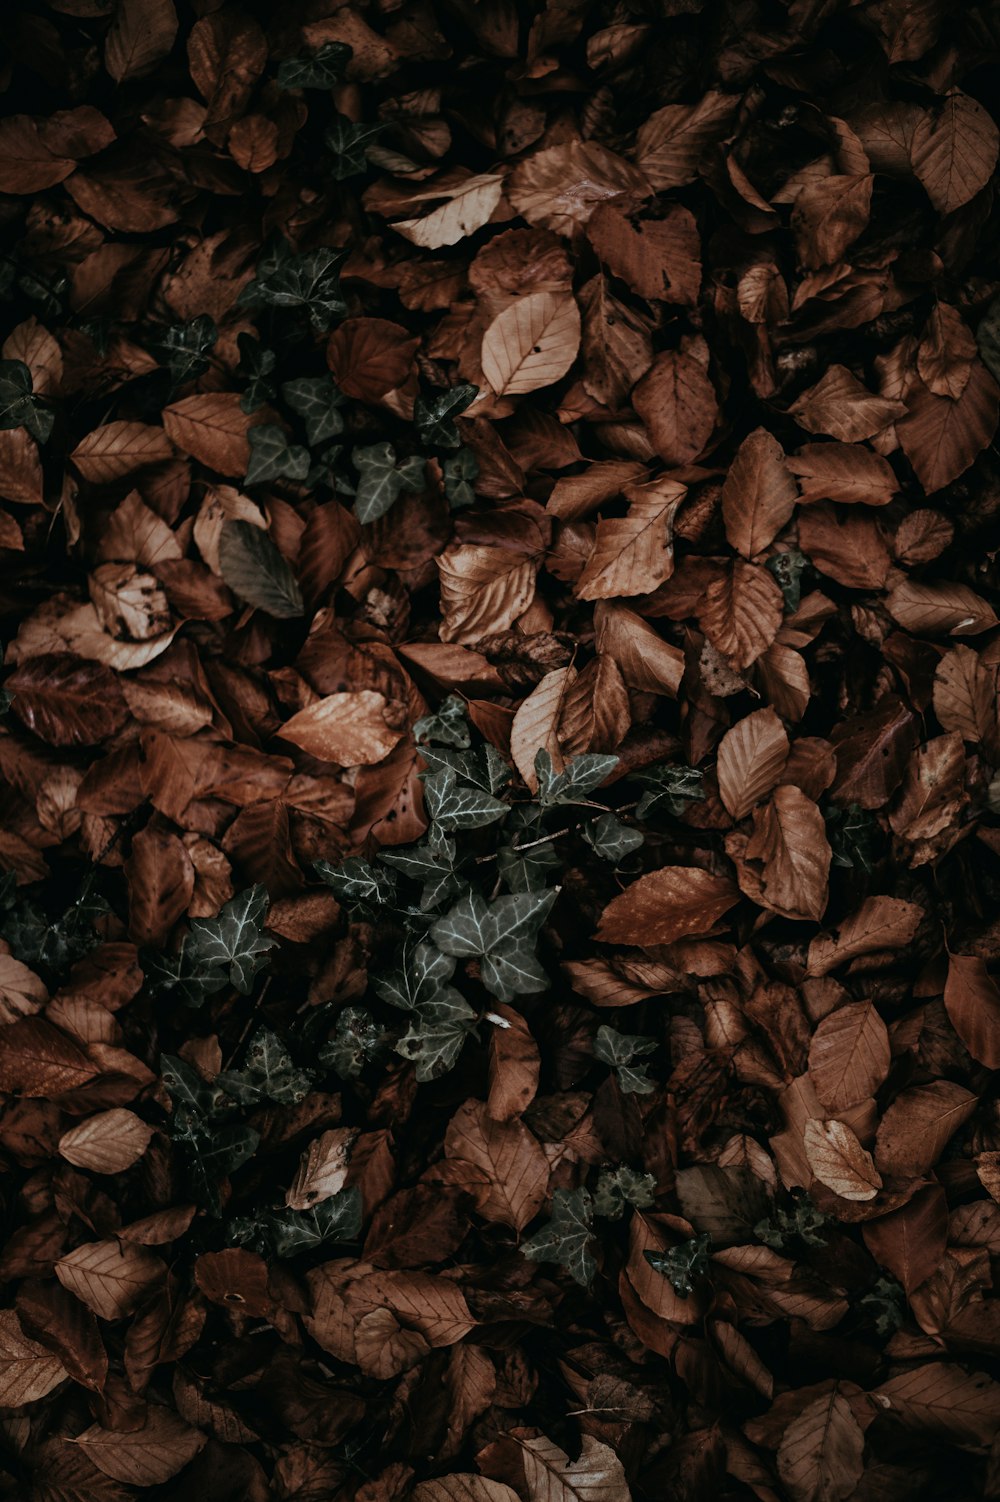 pile of dry leaves